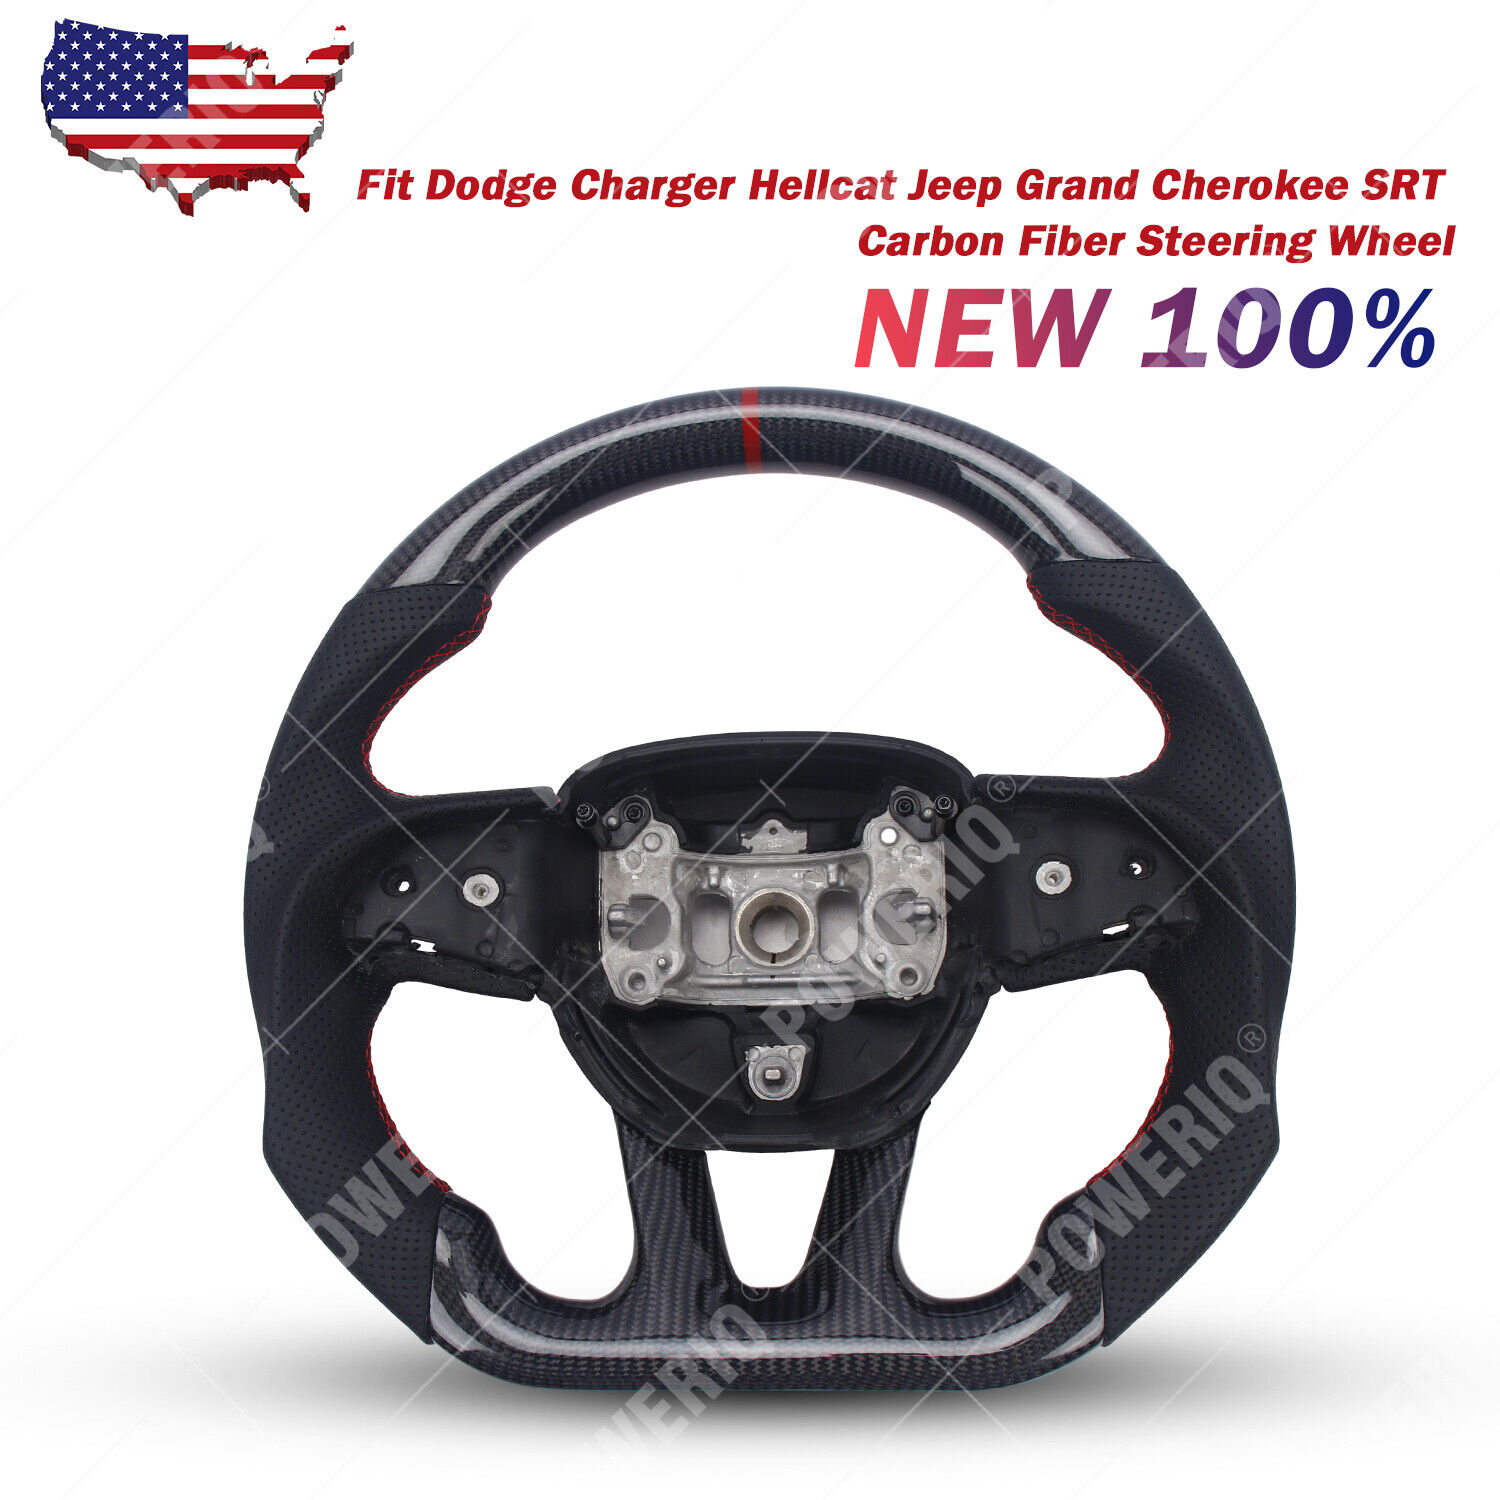 Fit Dodge Charger Hellcat Jeep Grand Cherokee SRT Carbon Fiber Steering Wheel